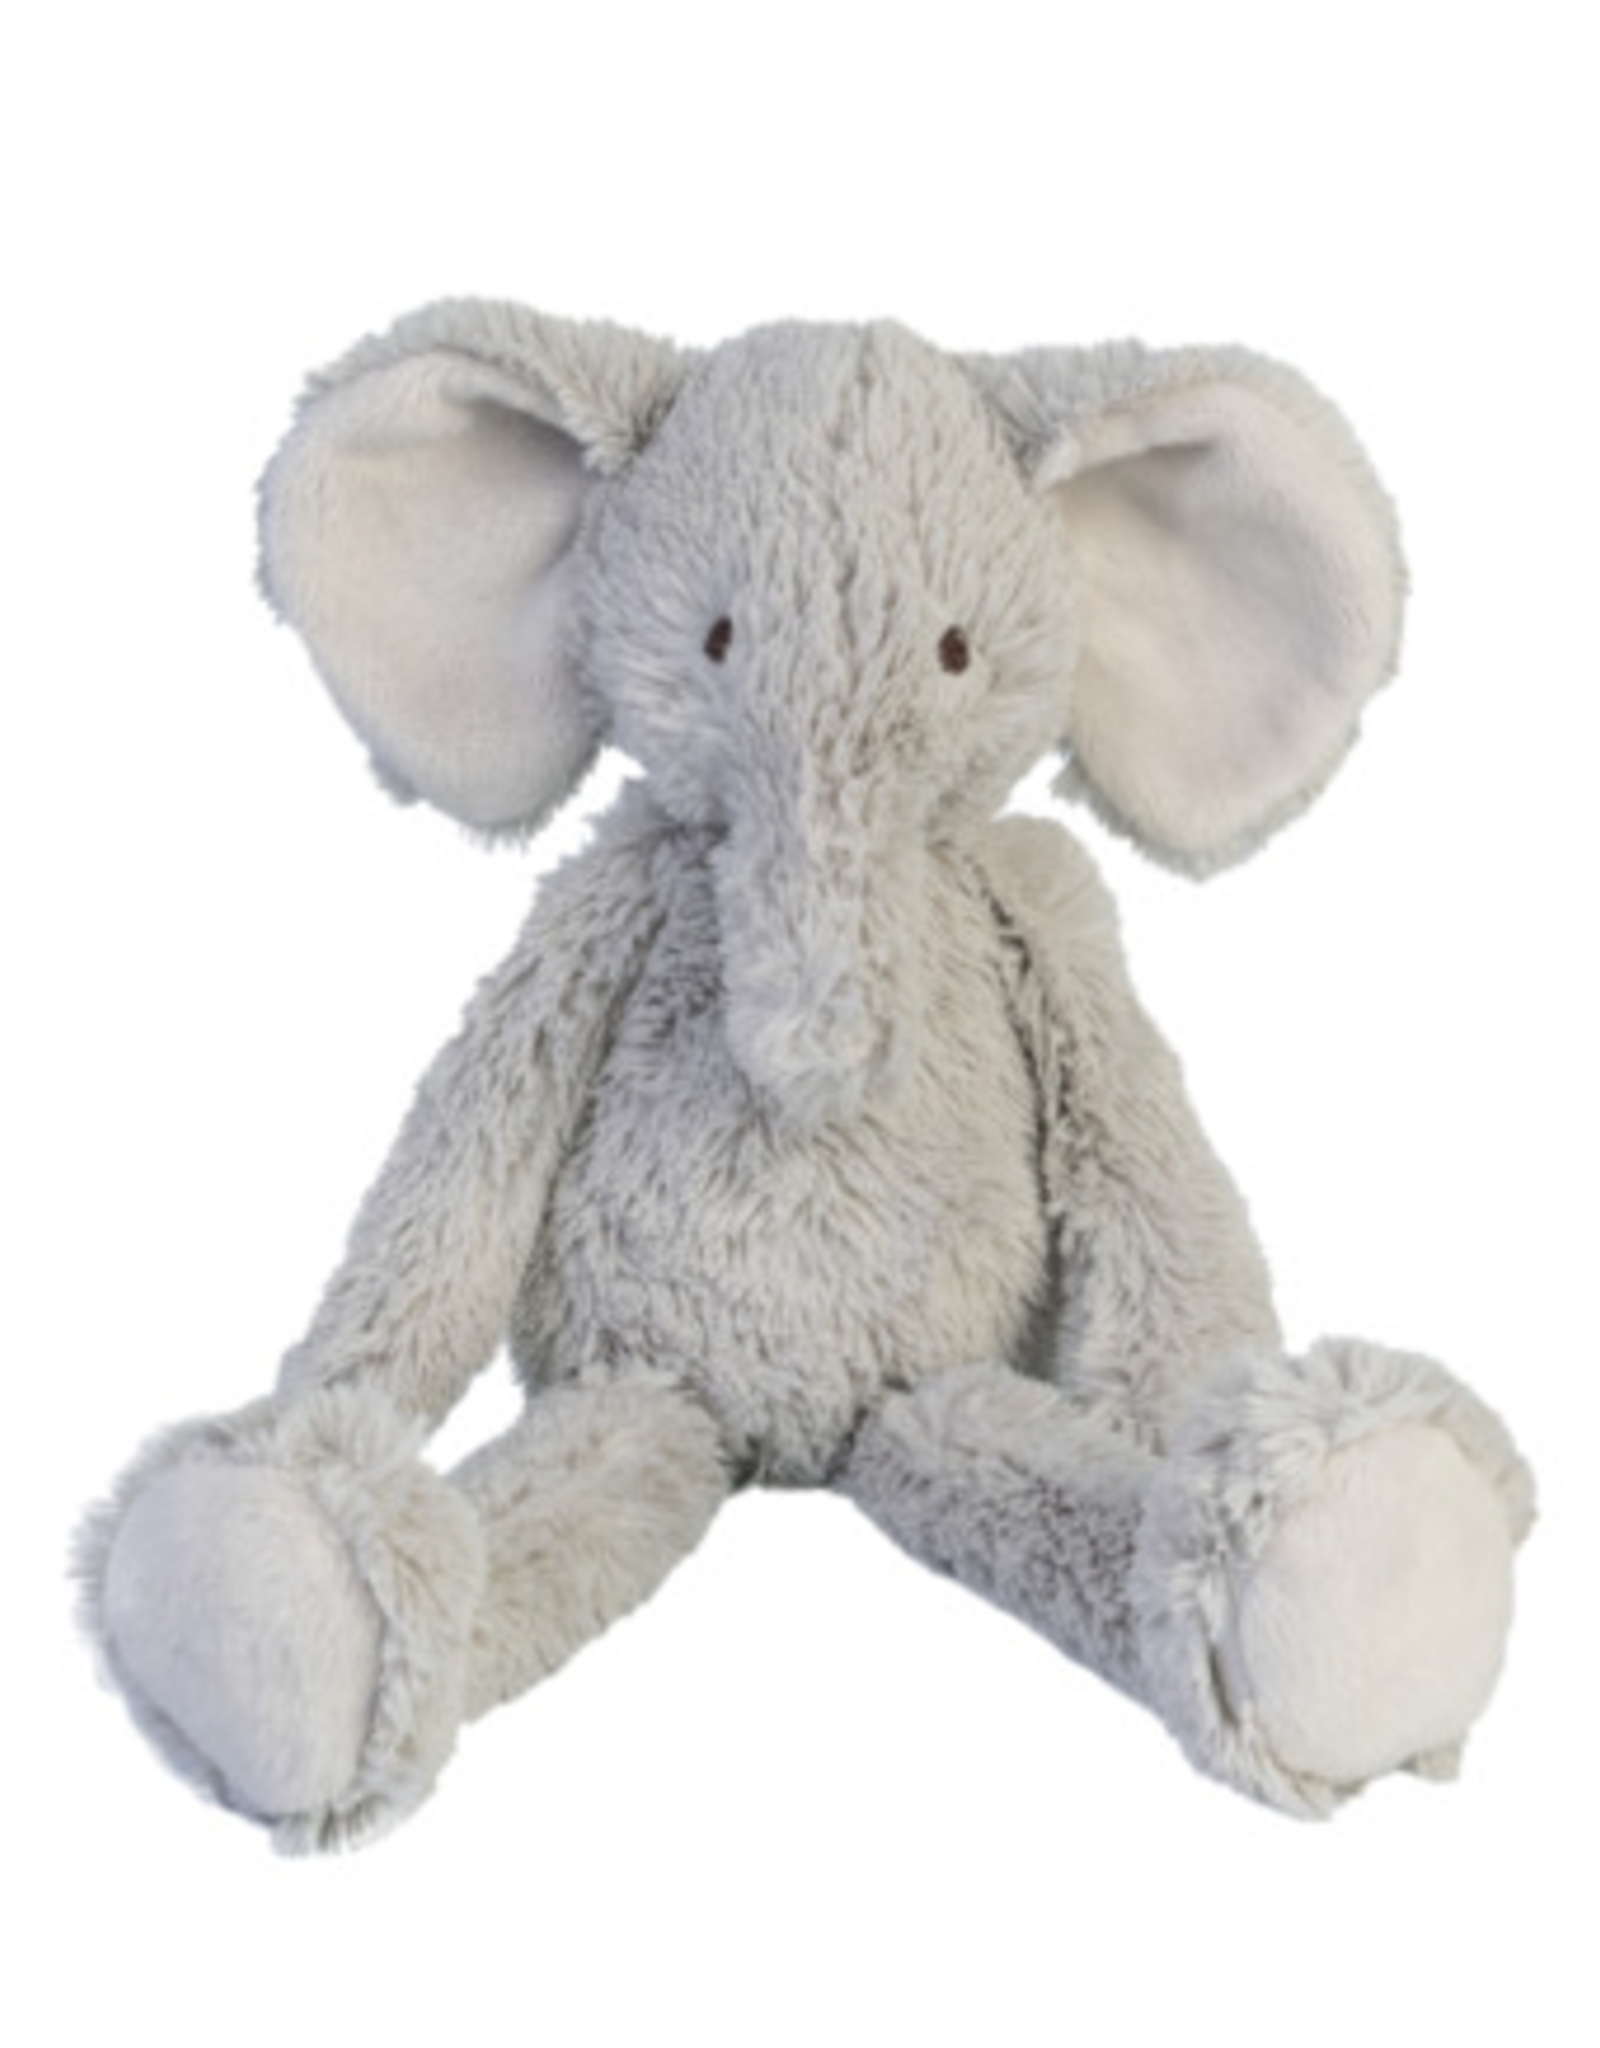 Newcastle Classics Stuffed Animal, Enzo the Elephant